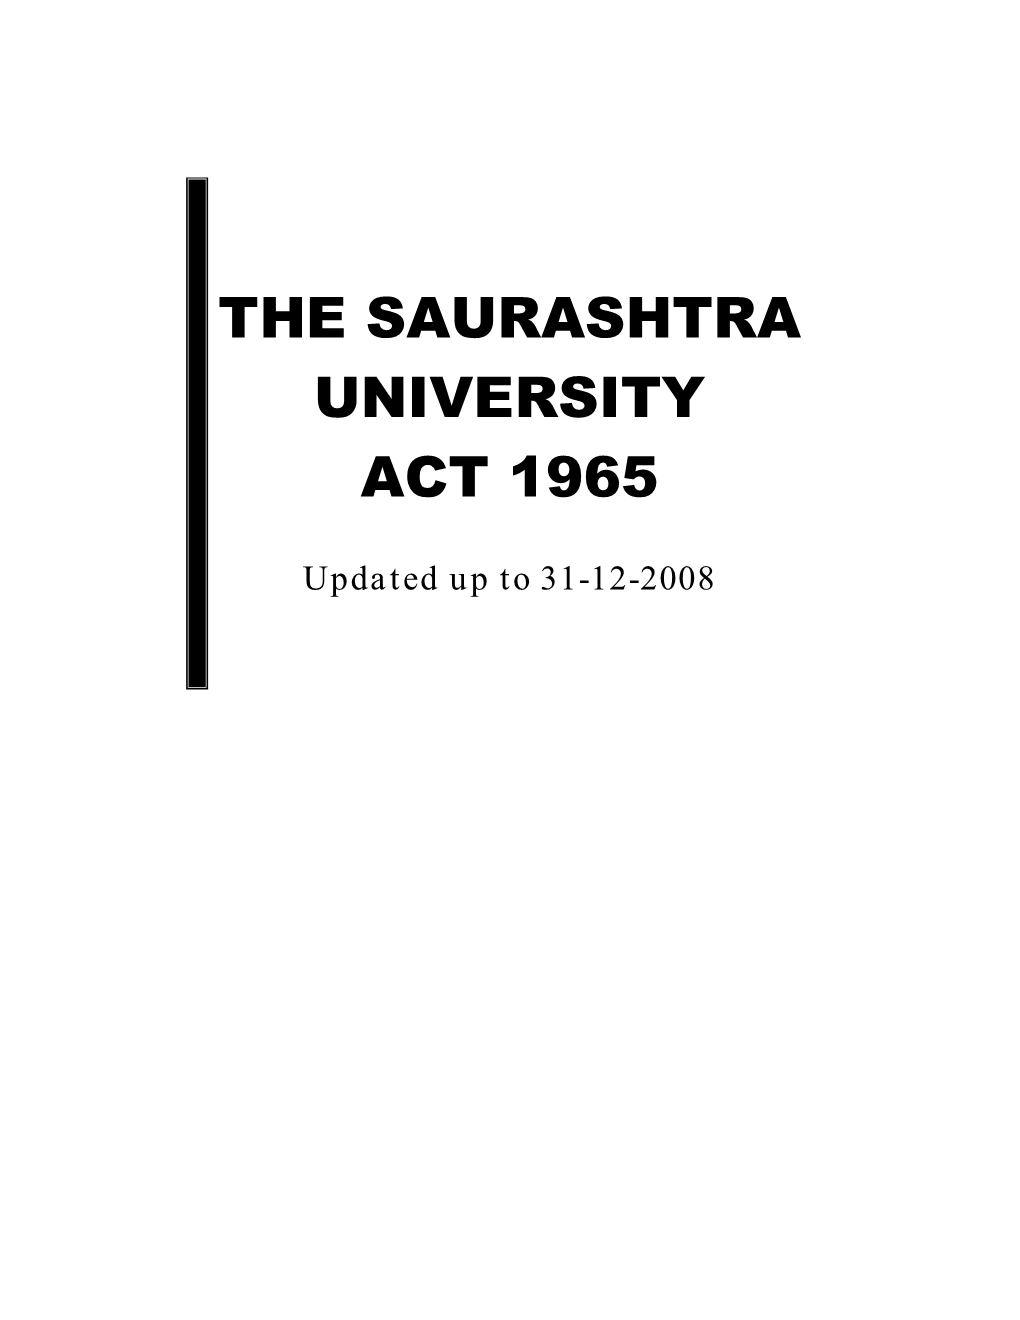 The Saurashtra University Act 1965